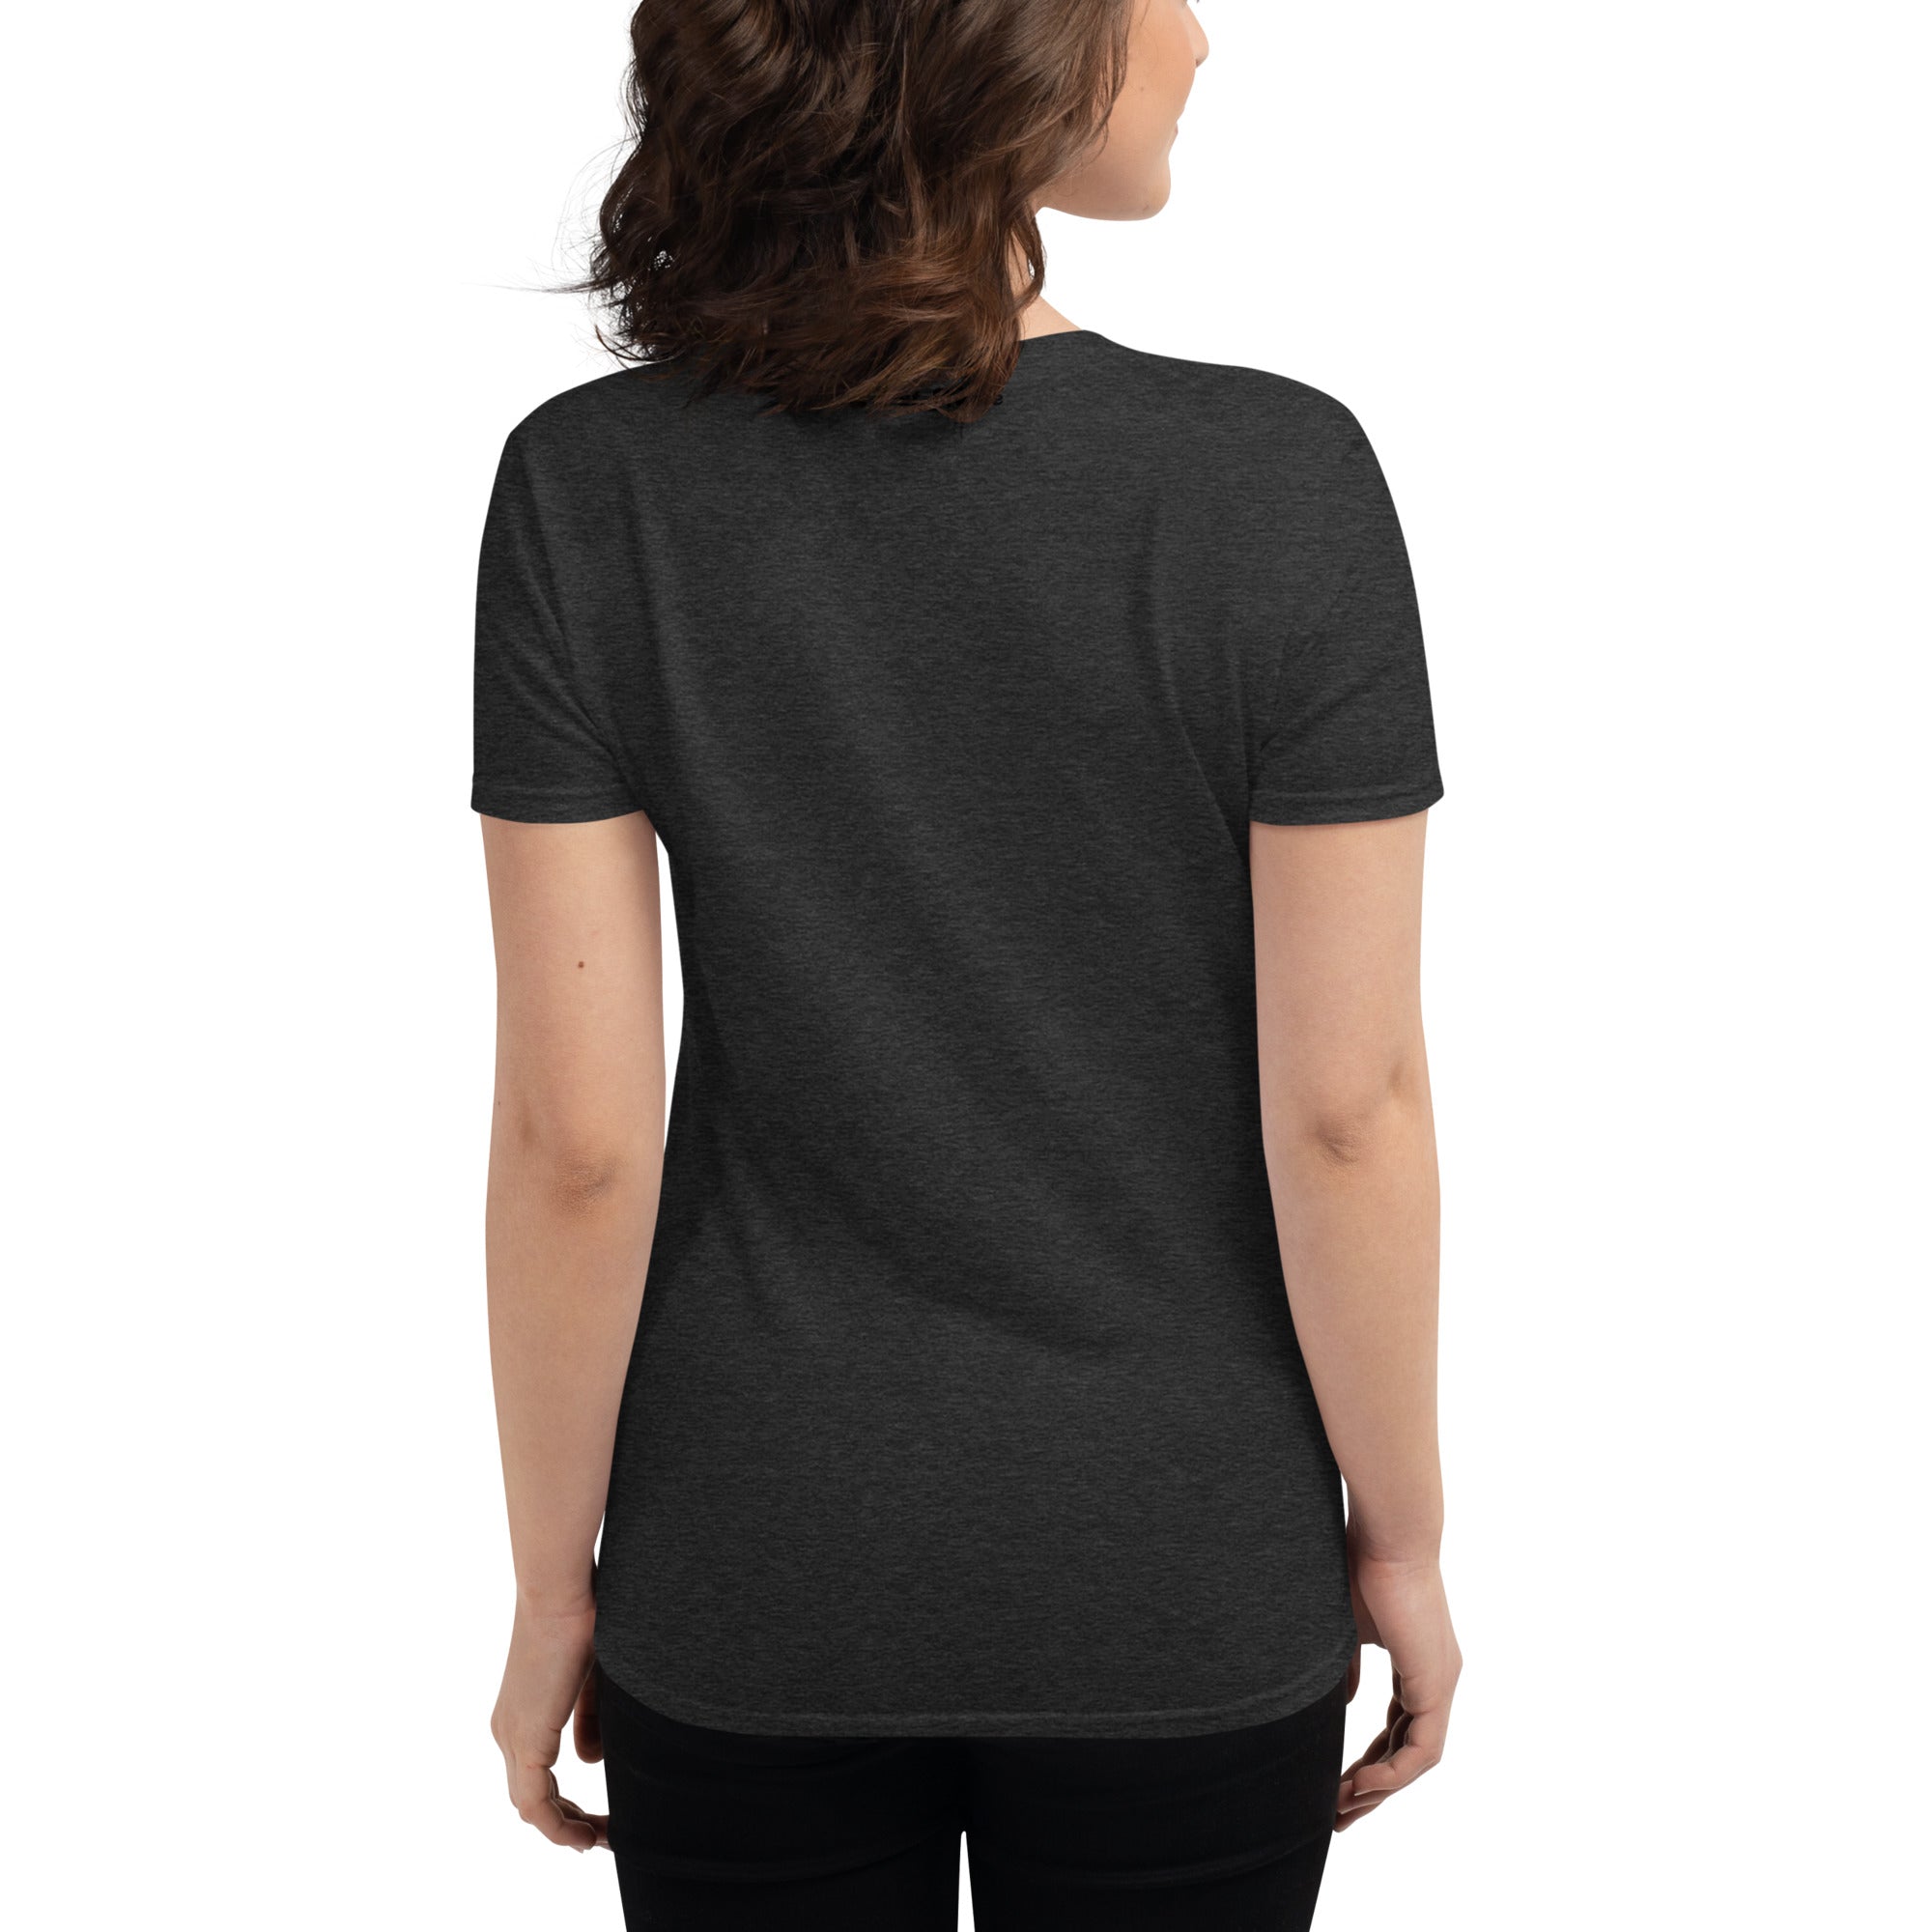 Bichon Frise  Women's short sleeve t-shirt